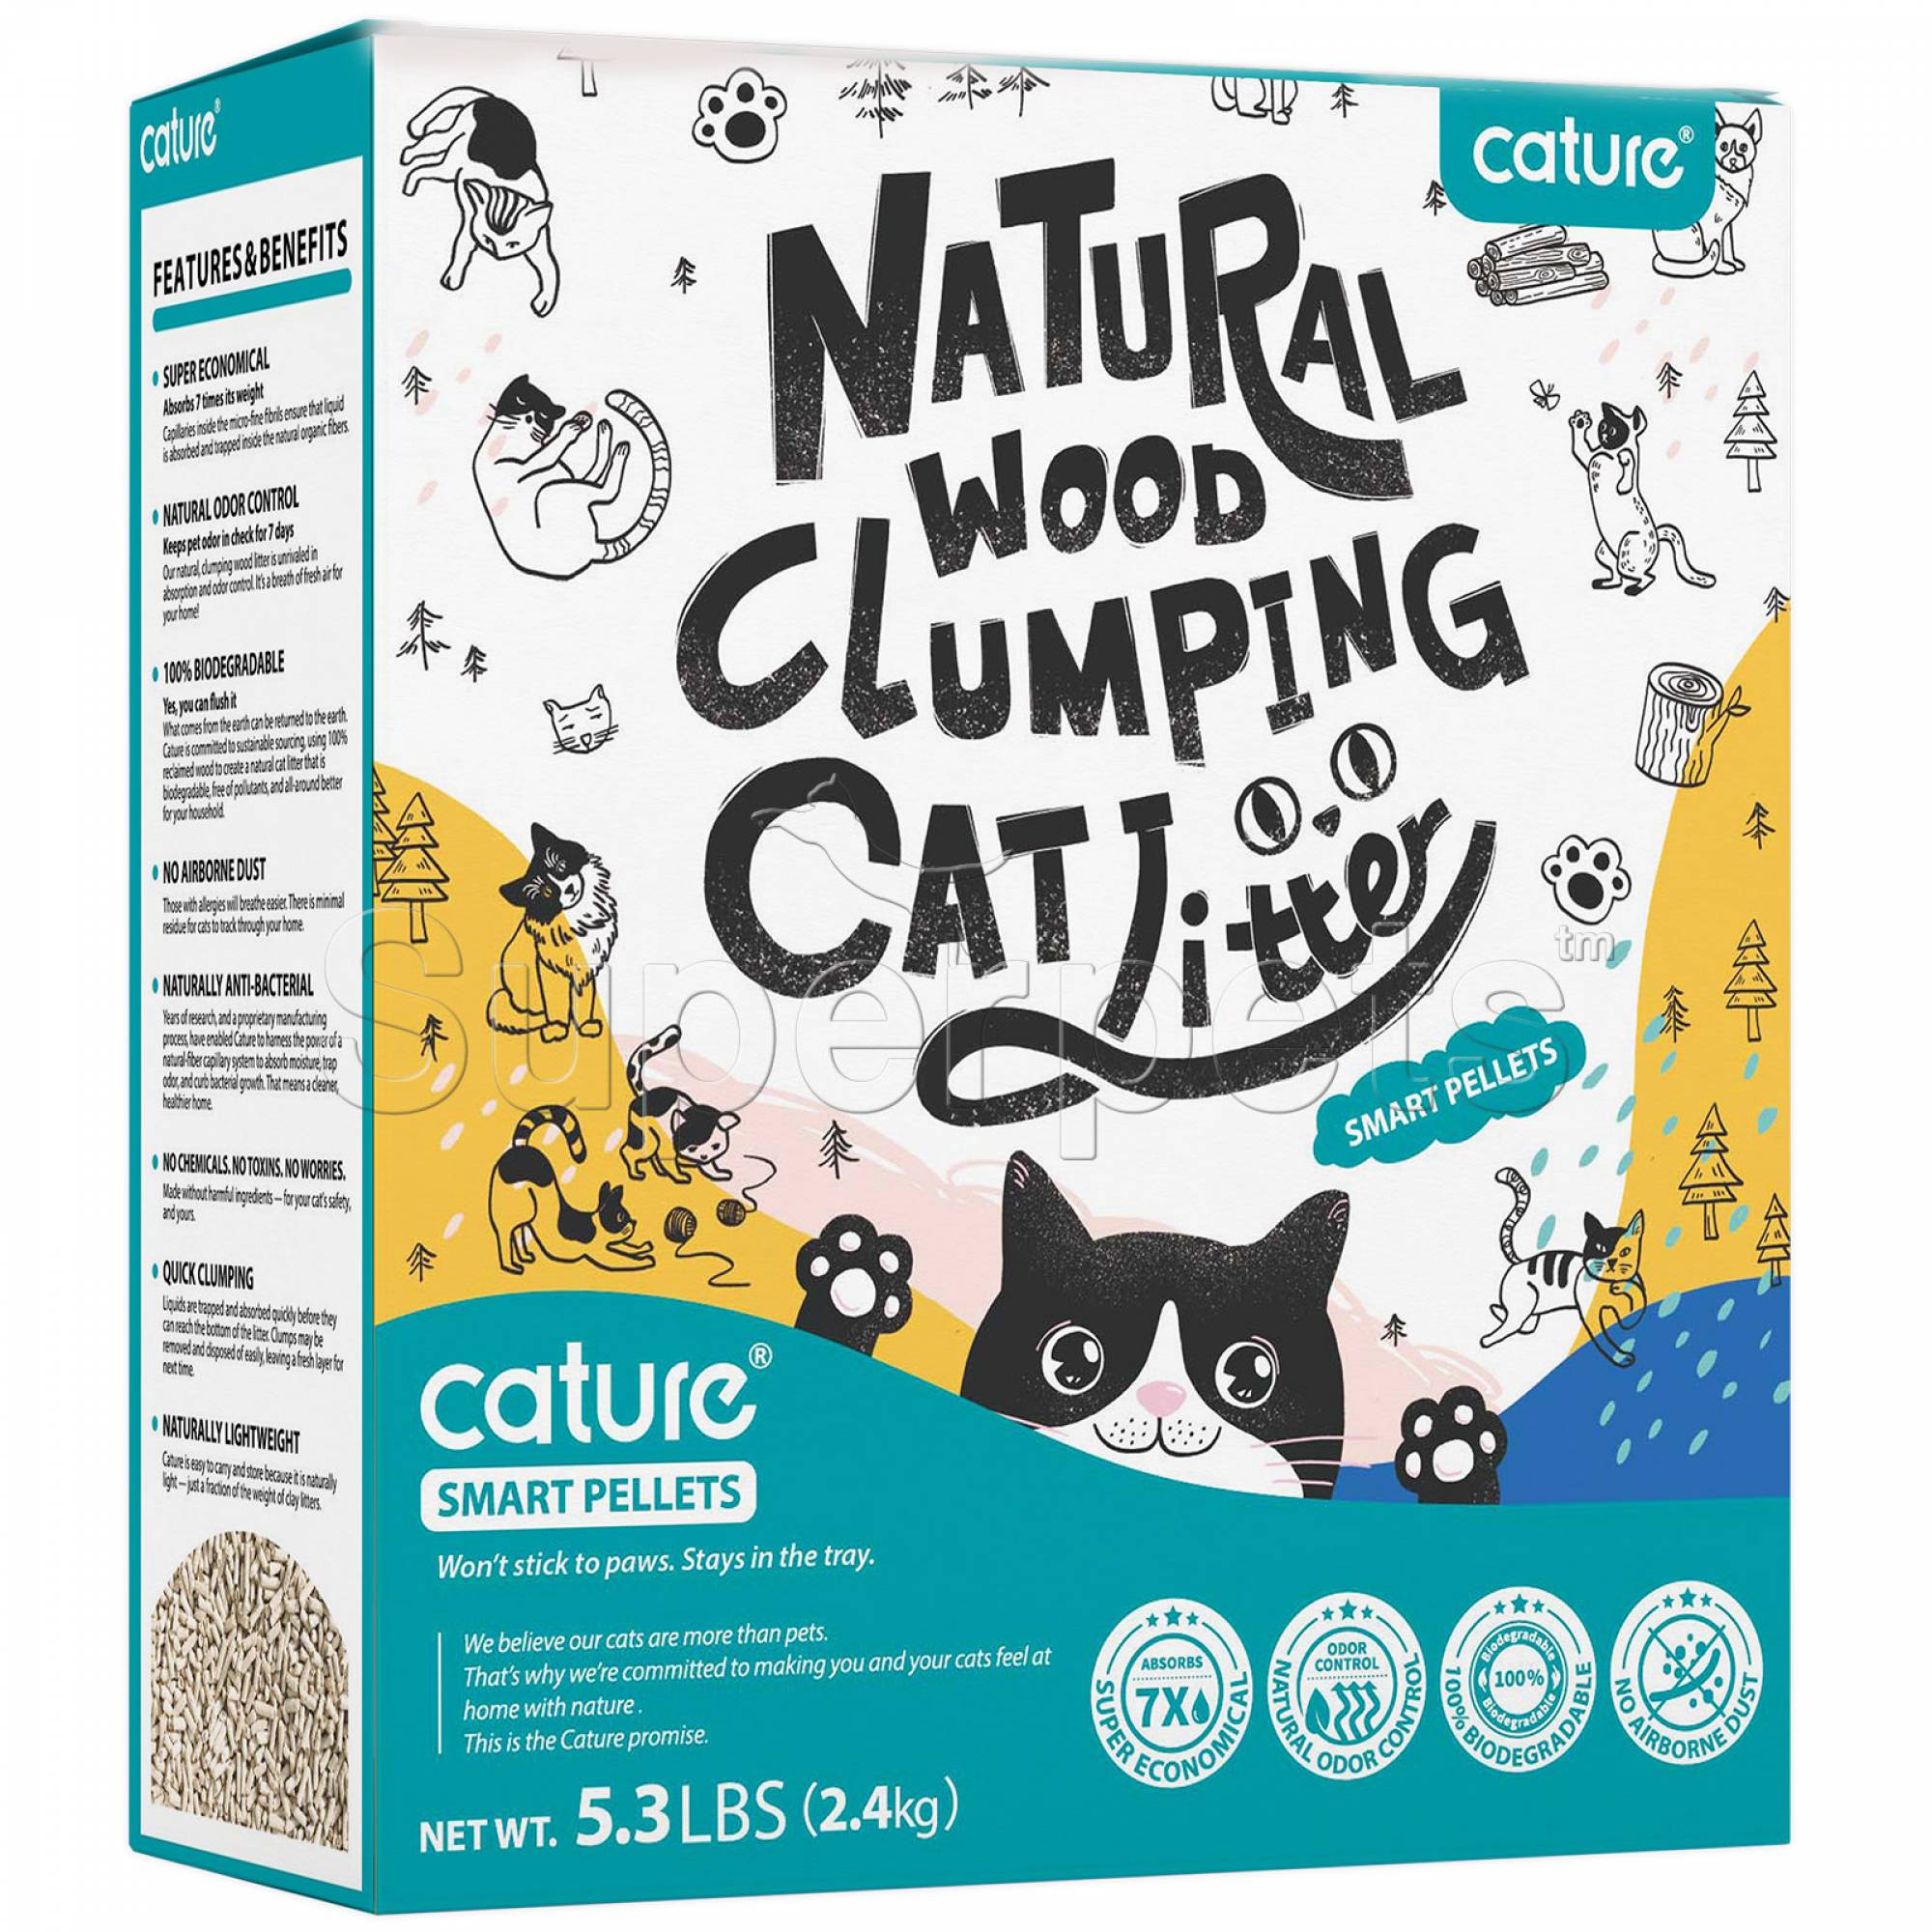 Cature Natural Wood Clumping Cat Litter - Smart Pellets 6L (2.4kg)